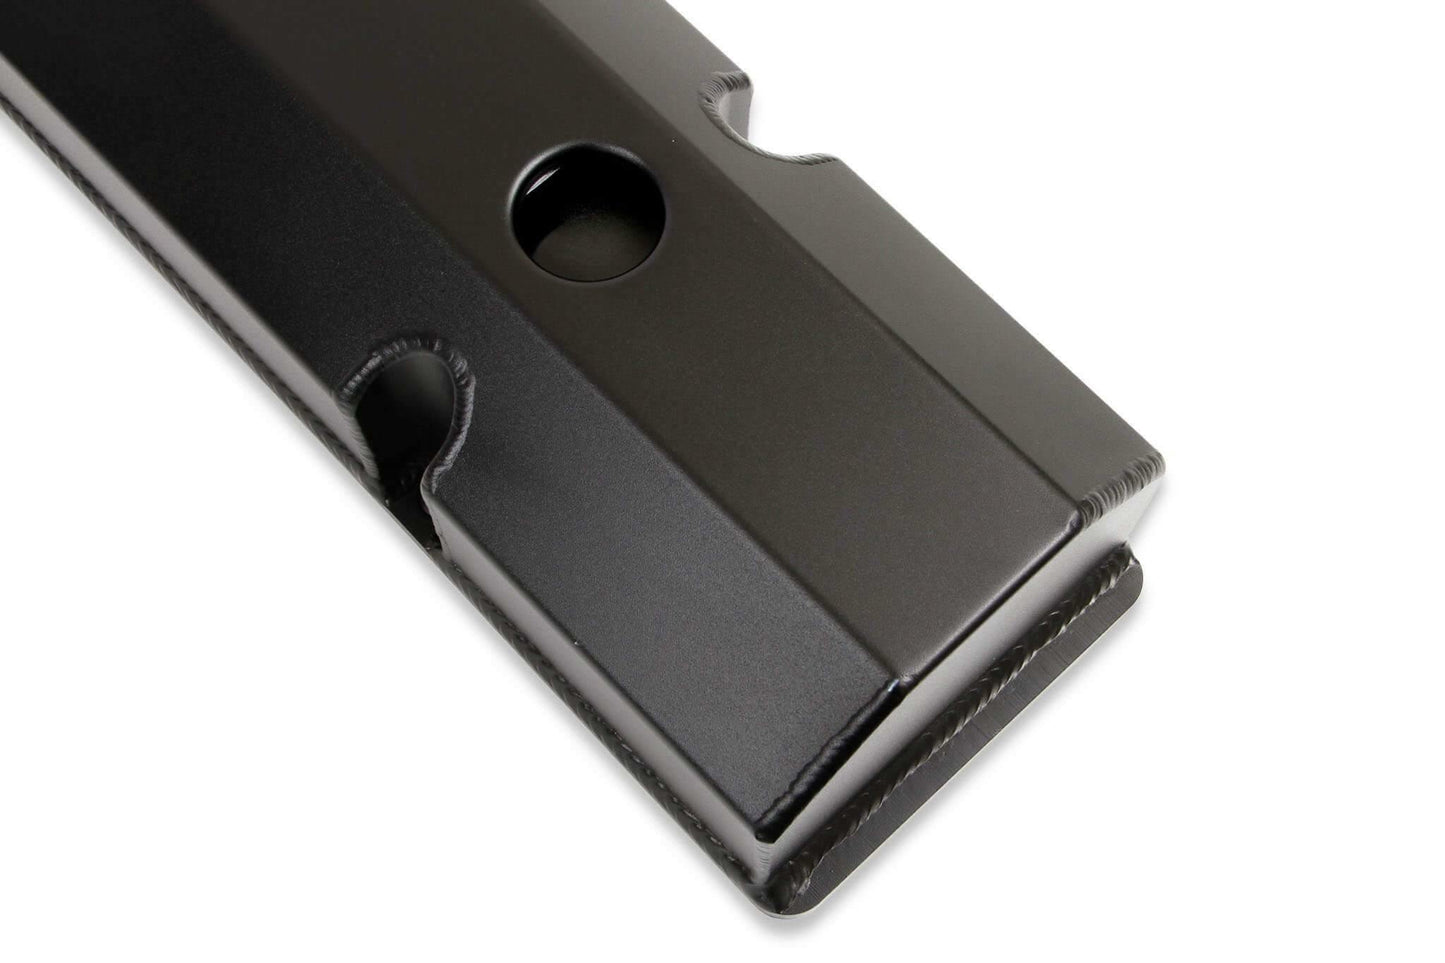 Mr. Gasket Fabricated Aluminum Valve Covers - Black Finish - 6818BG